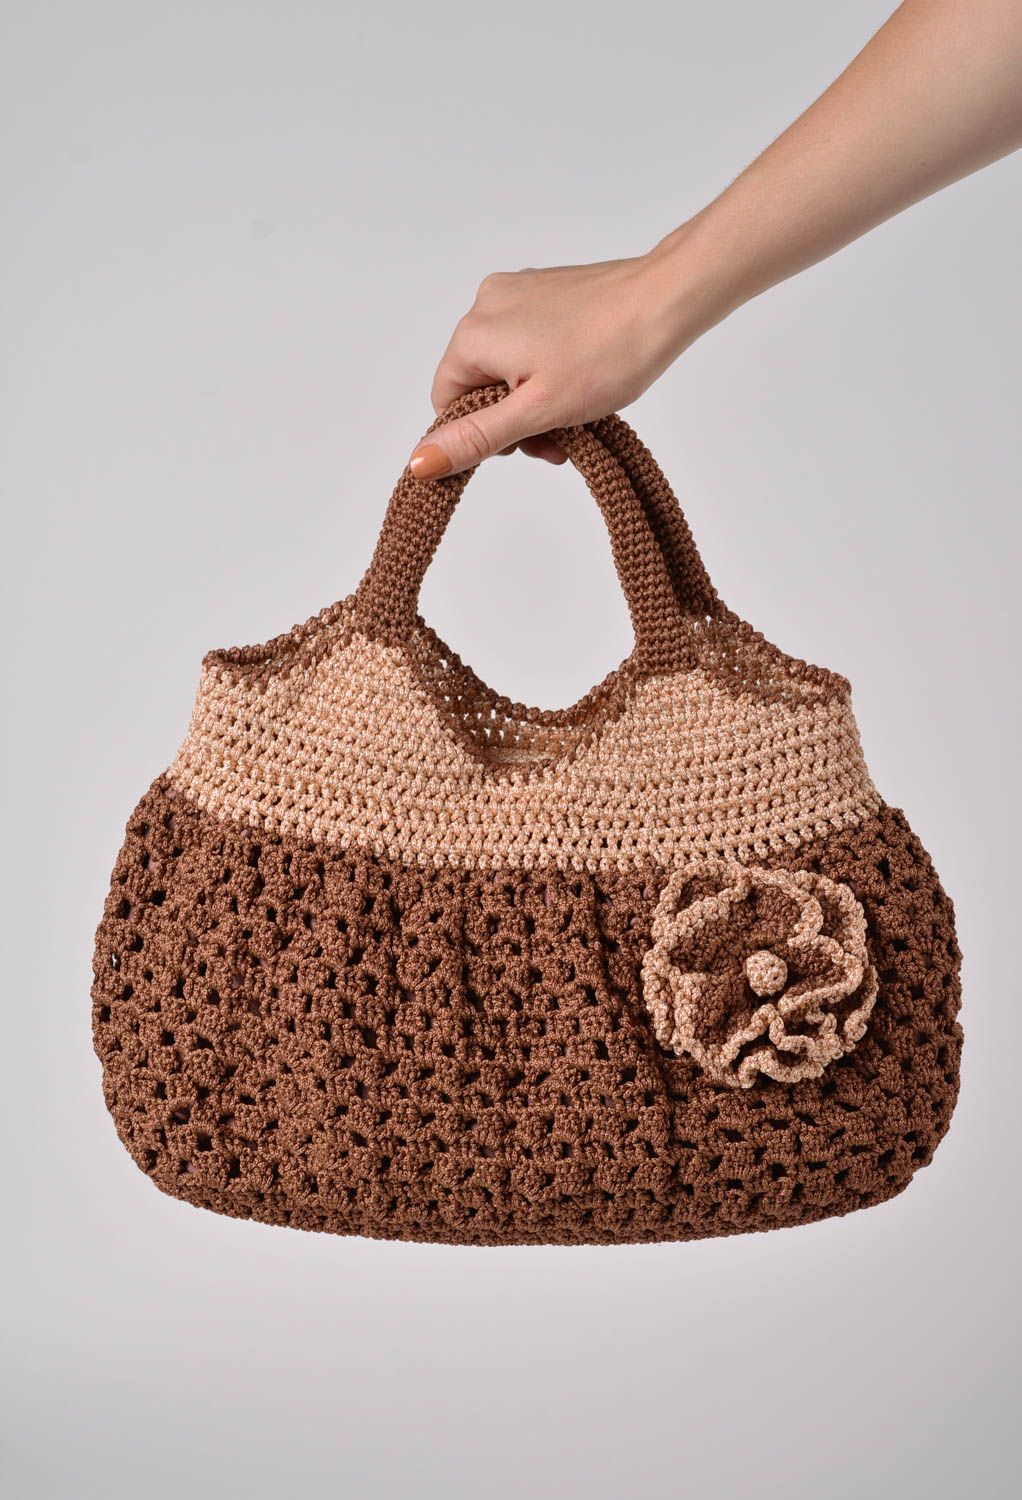 Elegant Brown Designer Bag